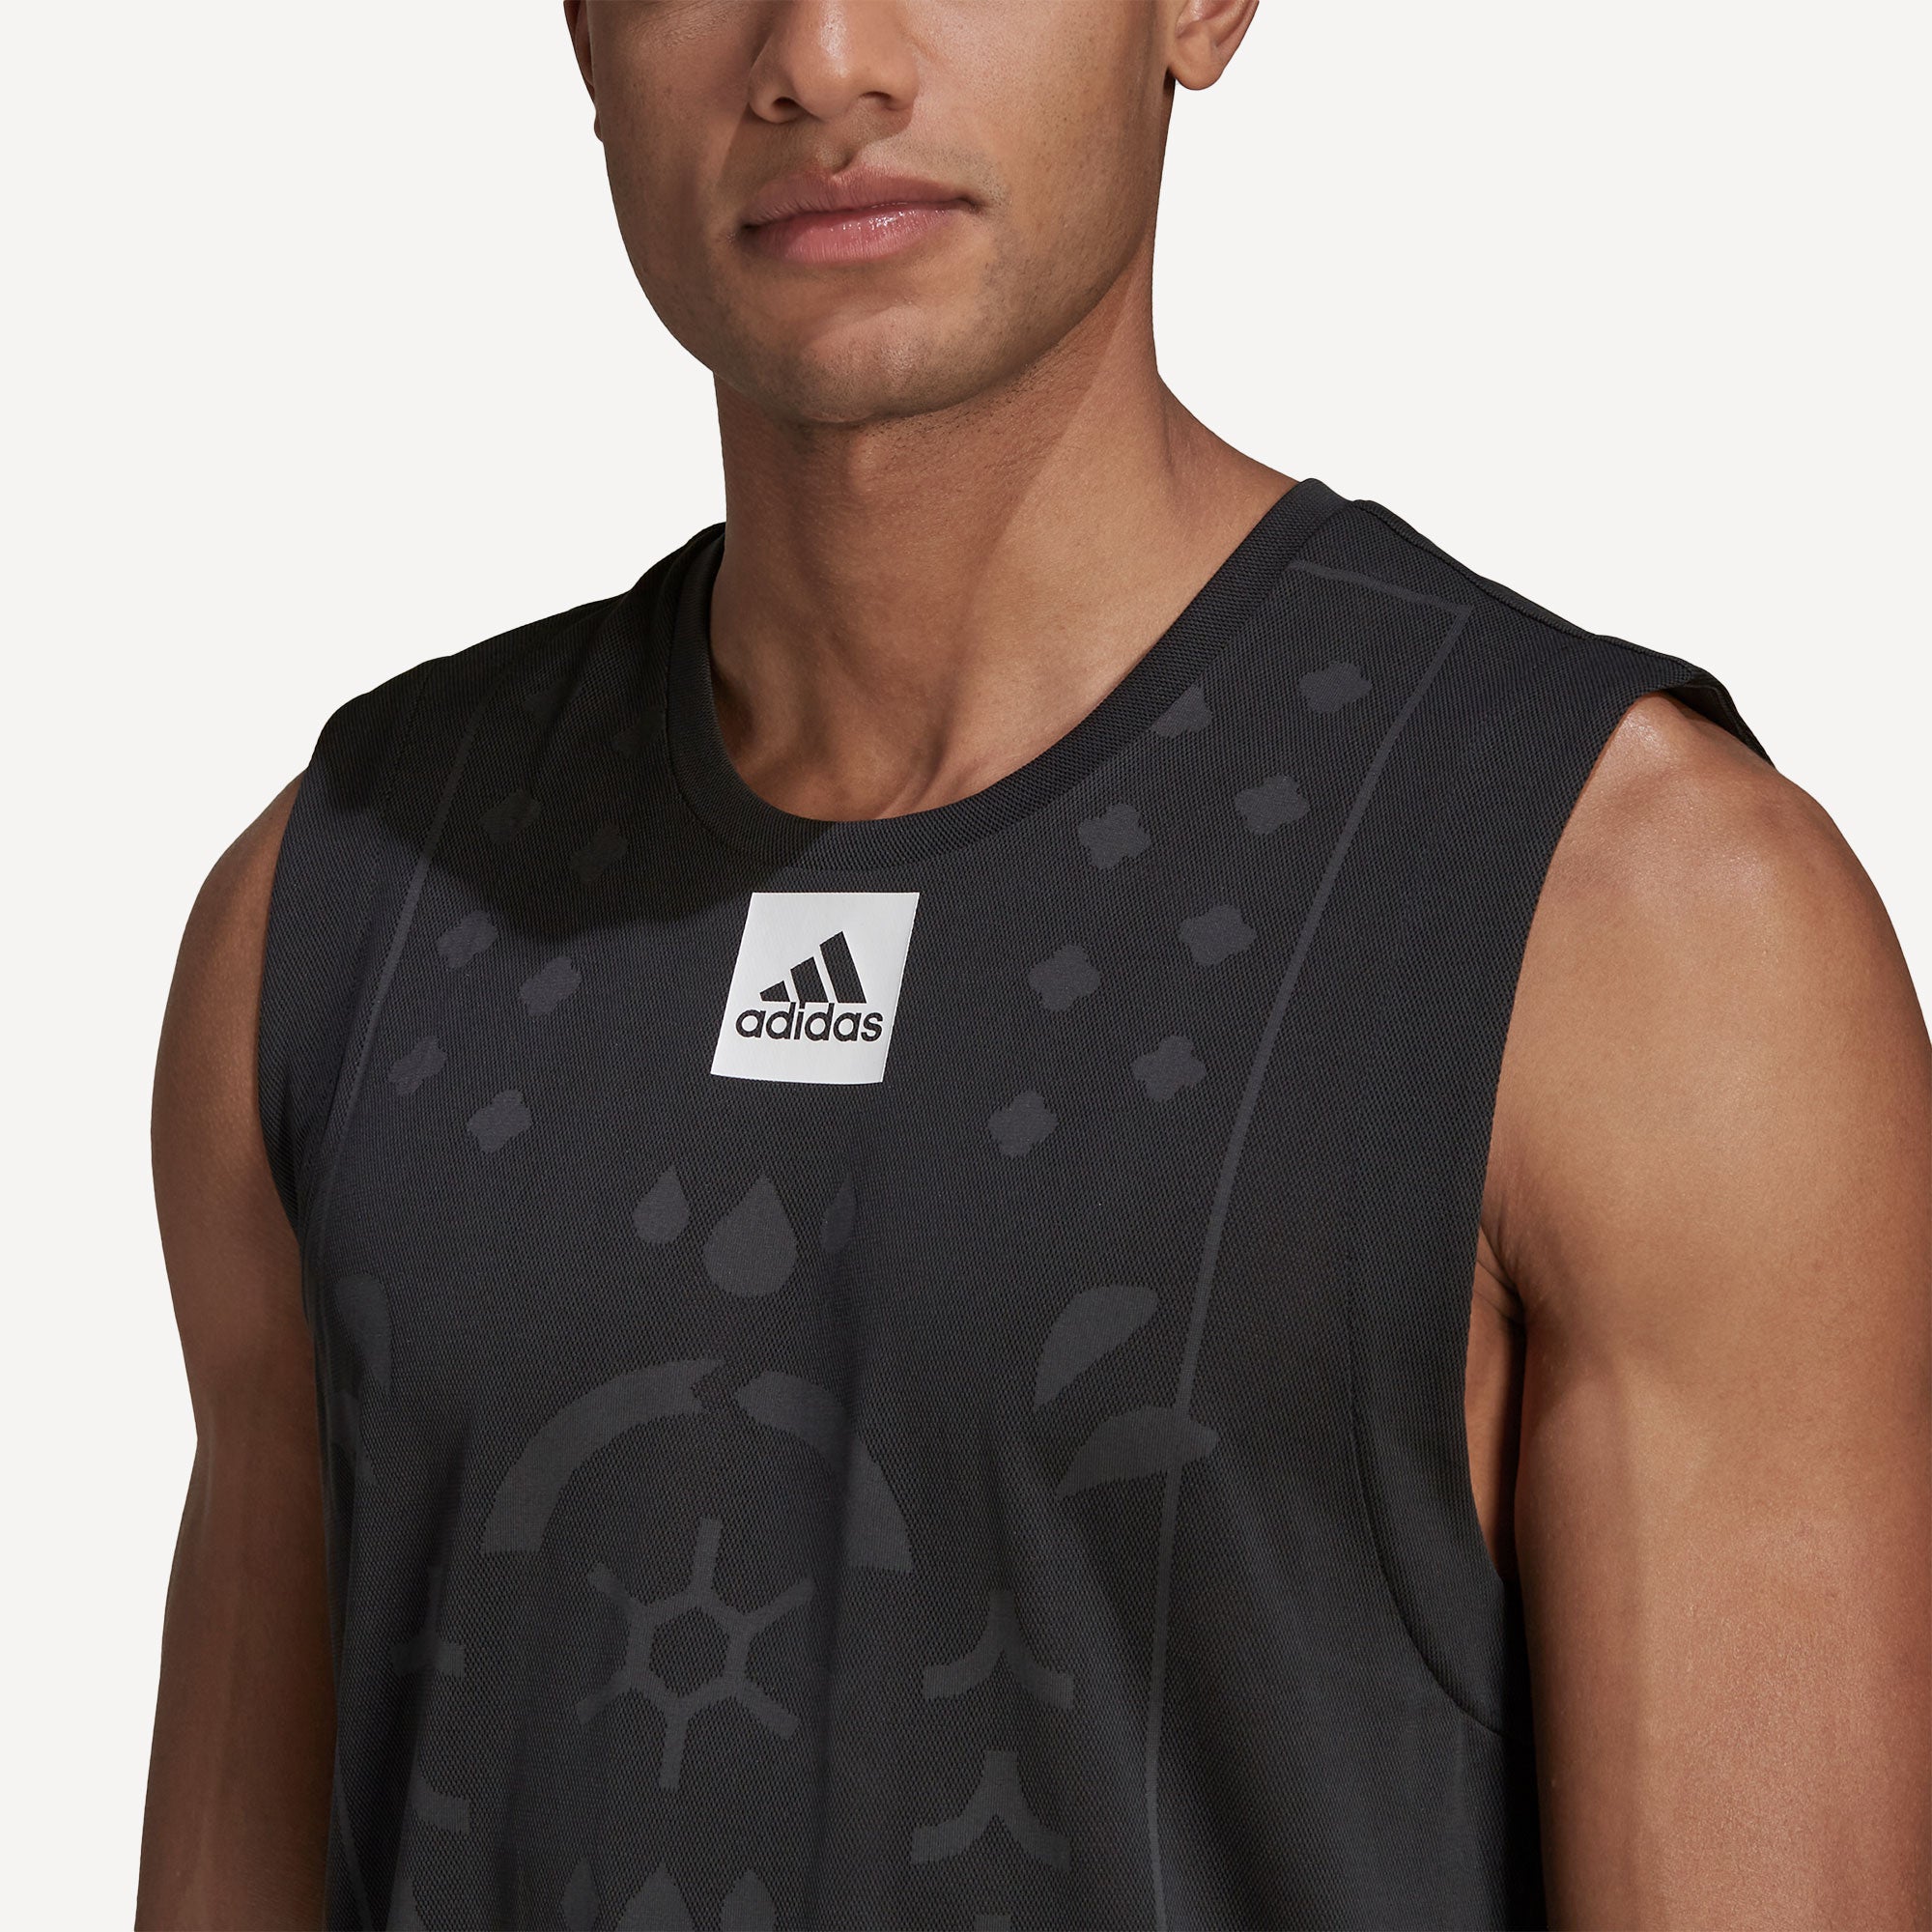 adidas Paris Men's Sleeveless Tennis Shirt Black (5)